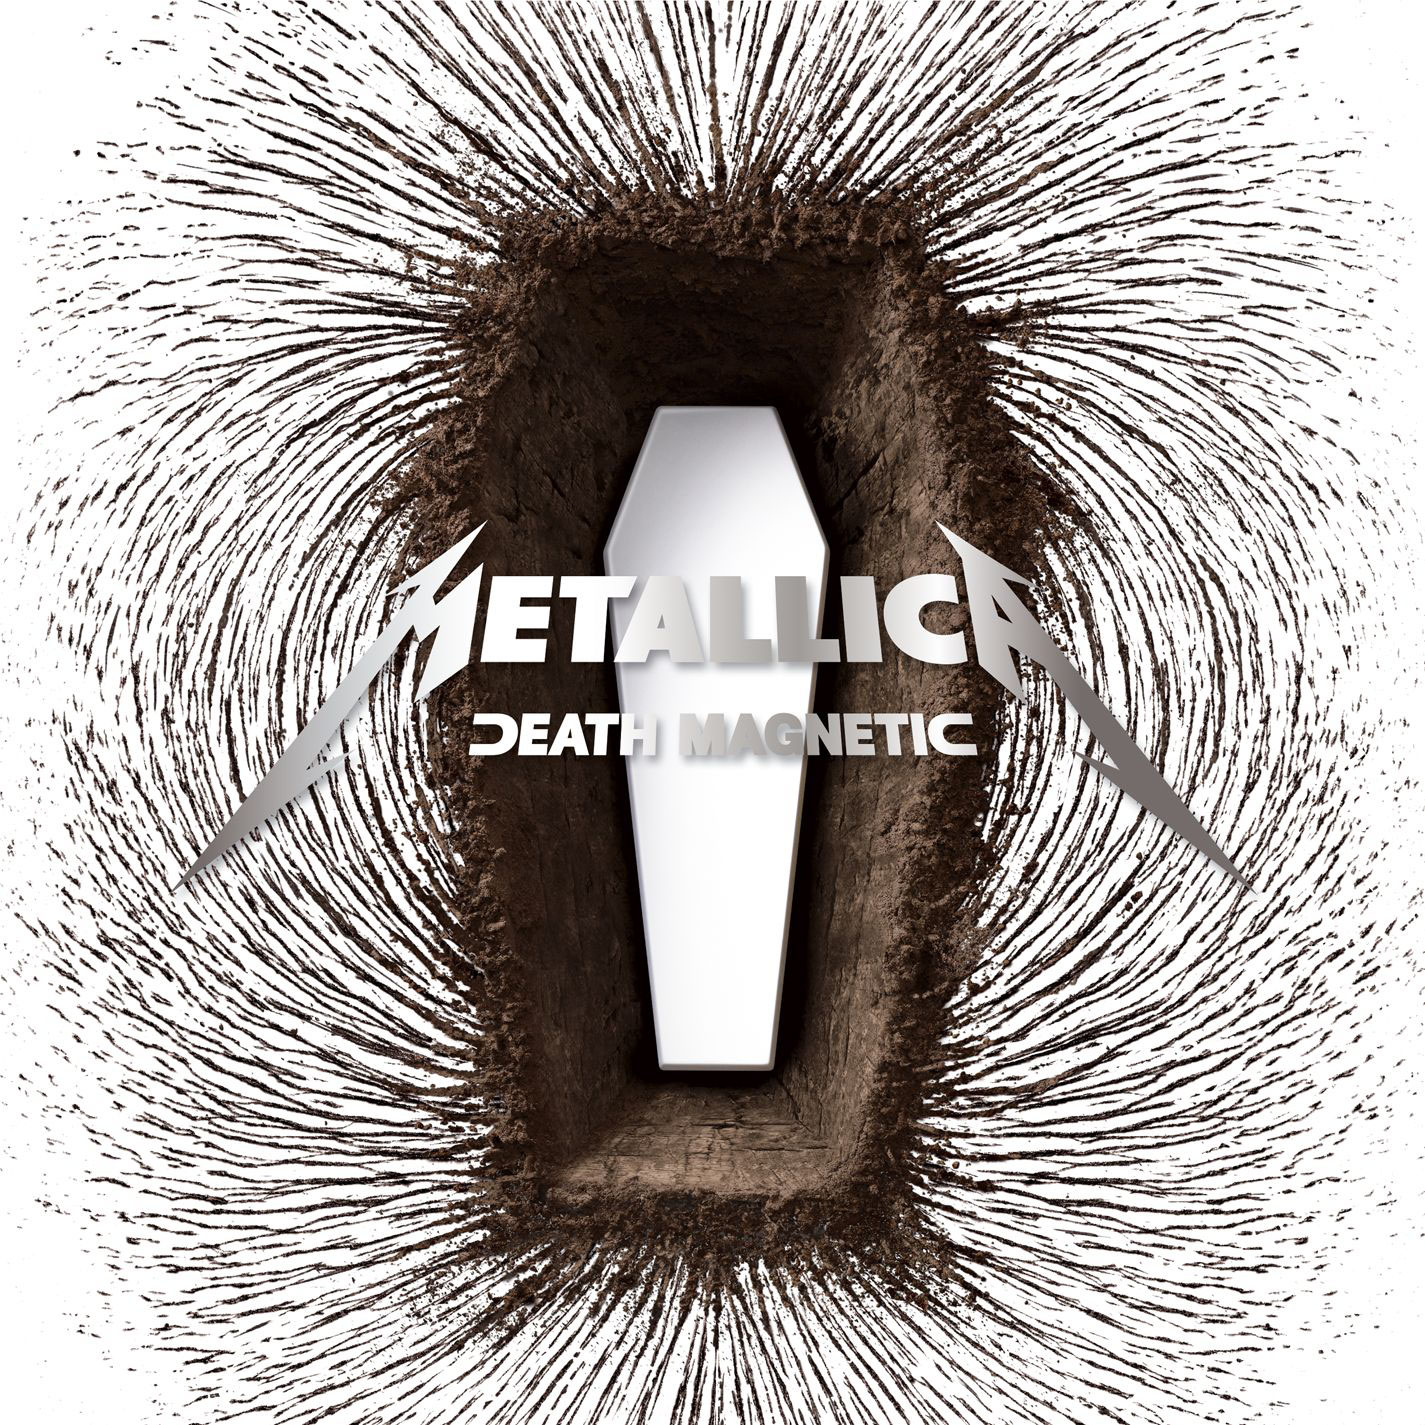 Metallica Death Magnetic 320 Kbps Torrent